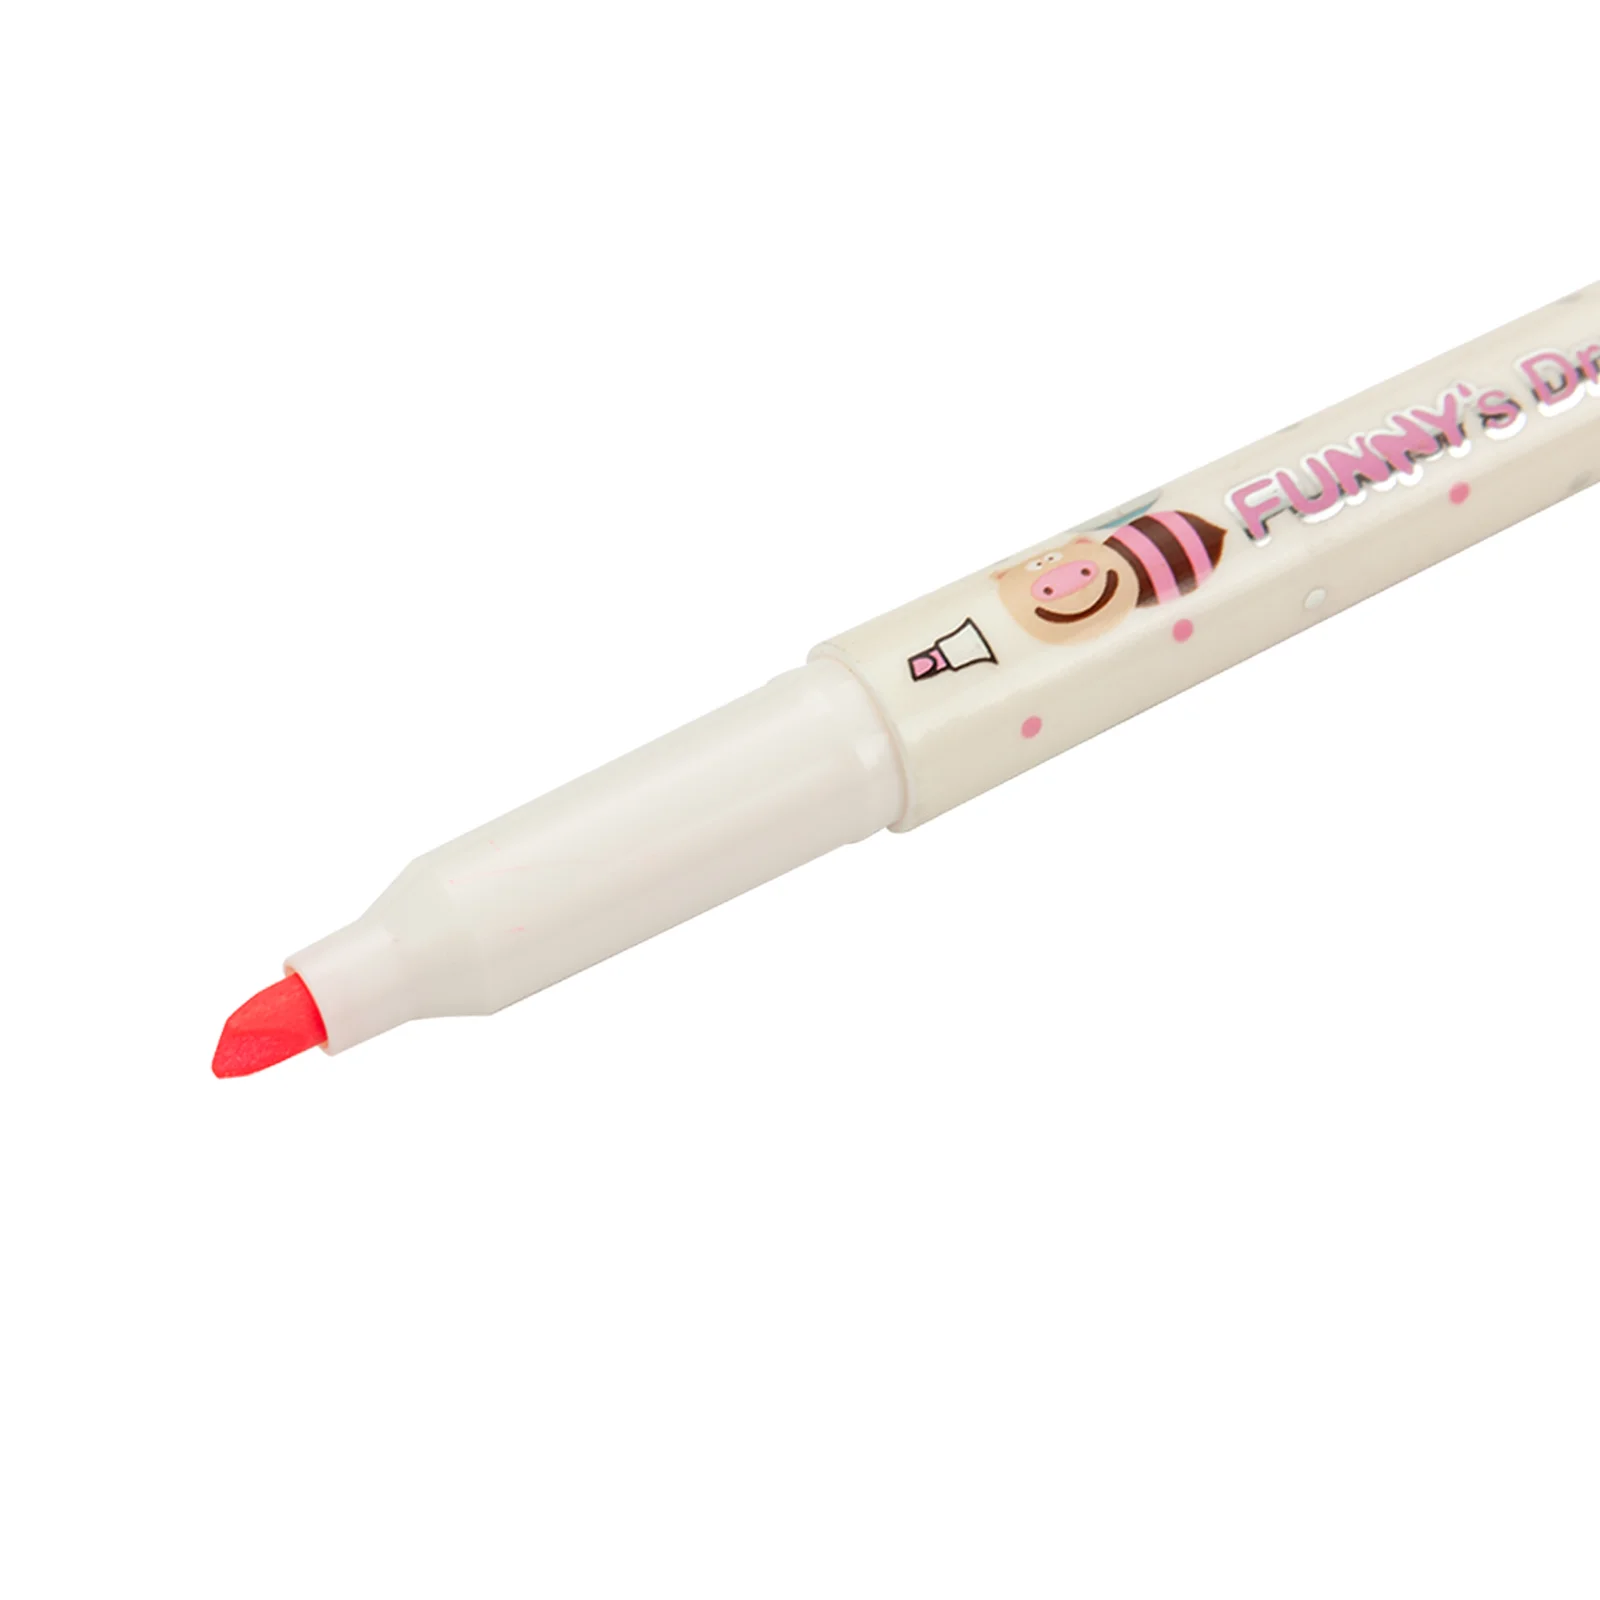 Cute Stationary Dual Point Chisel/Porous Tip 2-in-1 Color Custom Logo Highlighter Marker Pen